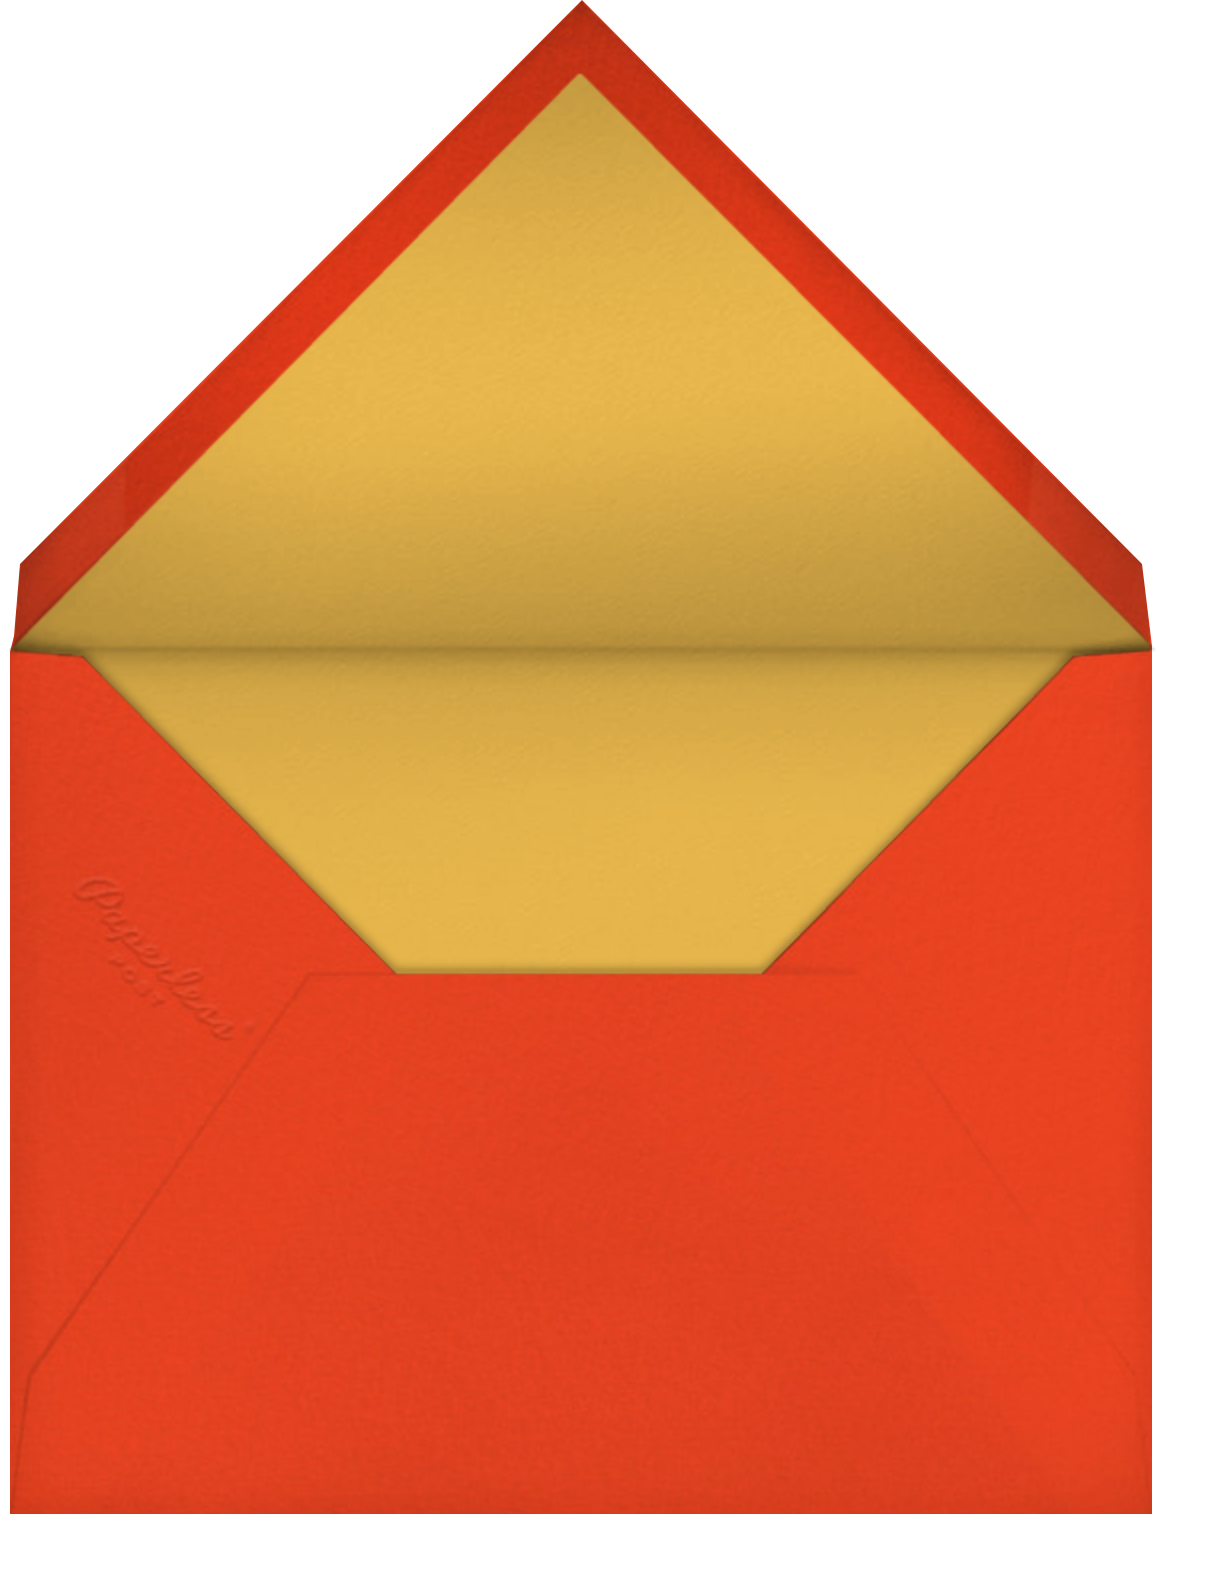 Bold Bouquet (Dylan Mierzwinski) - Red Cap Cards - Envelope